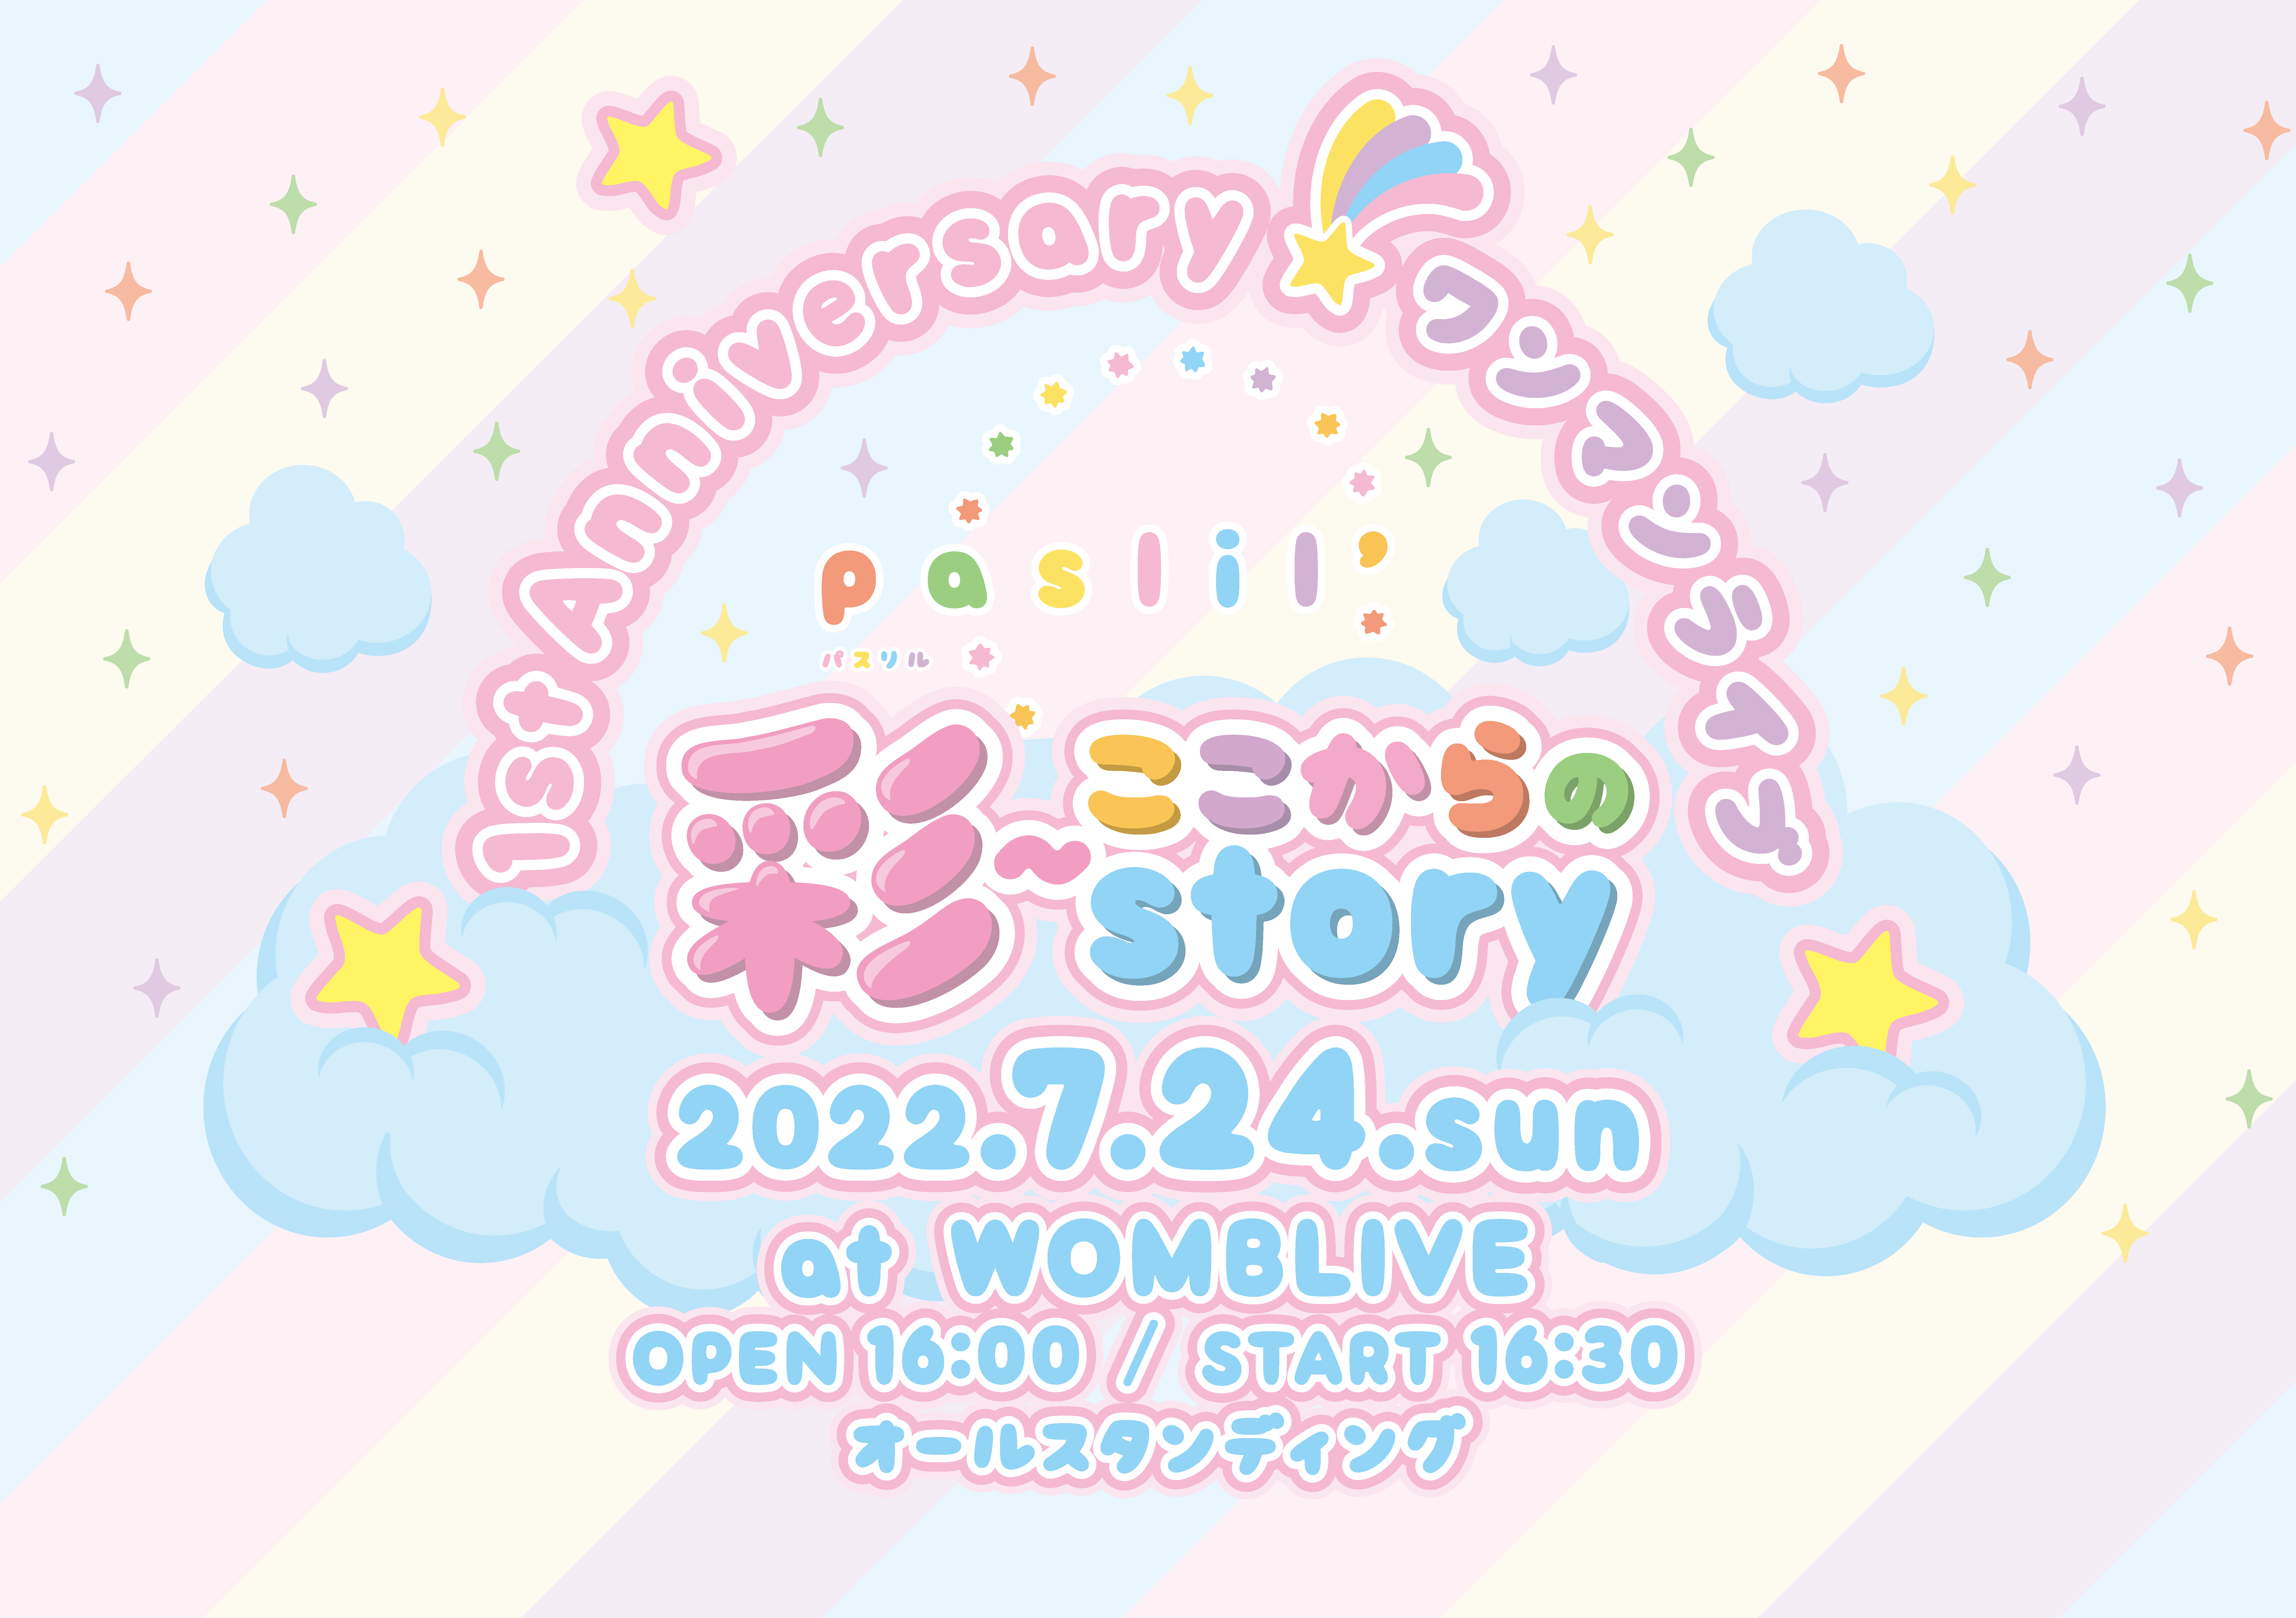 paslil' 1st Anniversary ワンマンライブ 「彩~ここからのstory~」